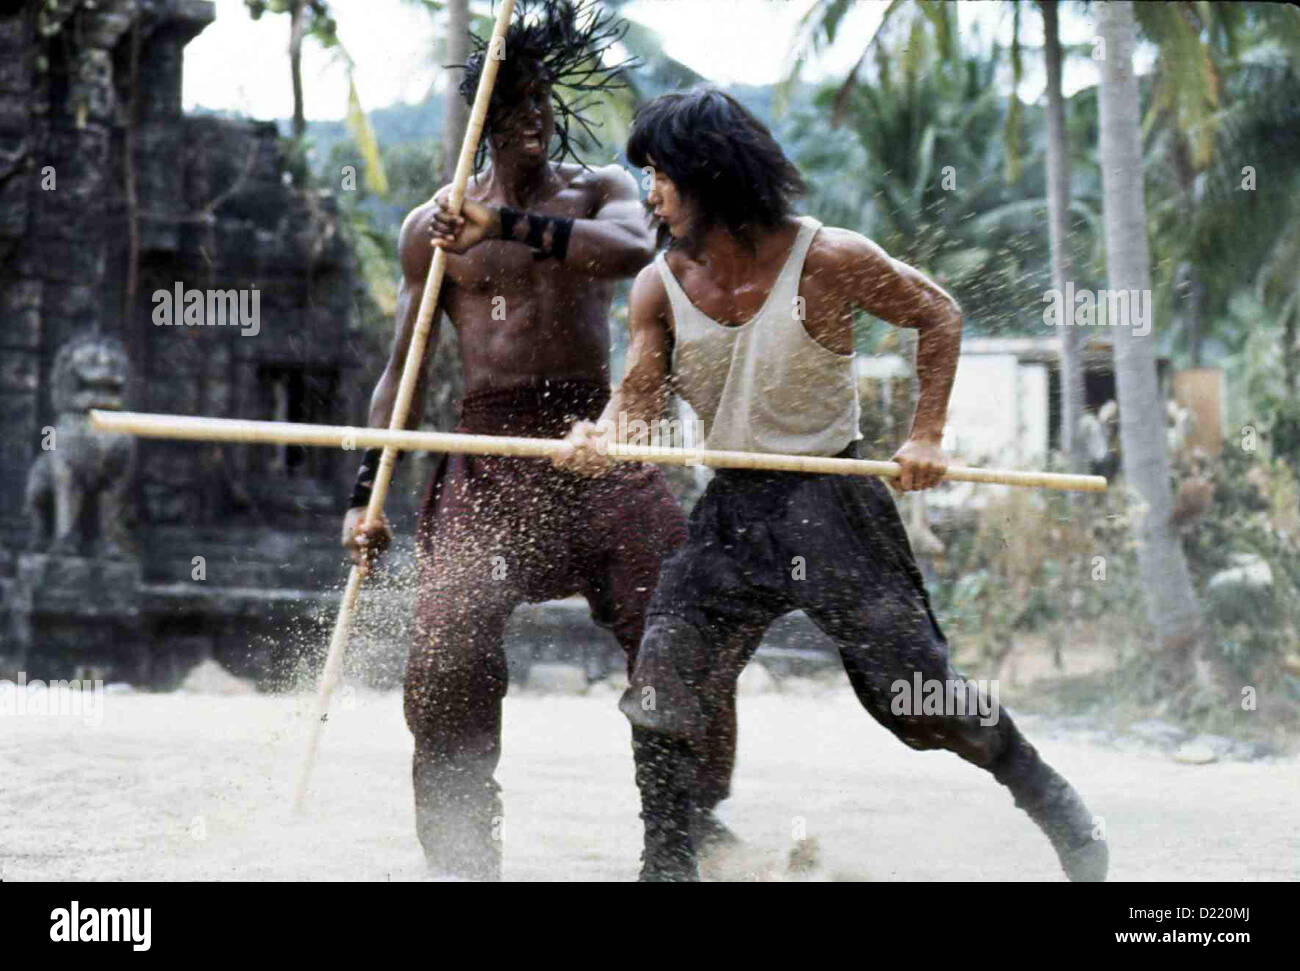 Mortal Kombat   Mortal Kombat   Robin Shou Liu Kang (Robin Shou,r) *** Local Caption *** 1995  New Line Cinema  clips 05/98 Stock Photo